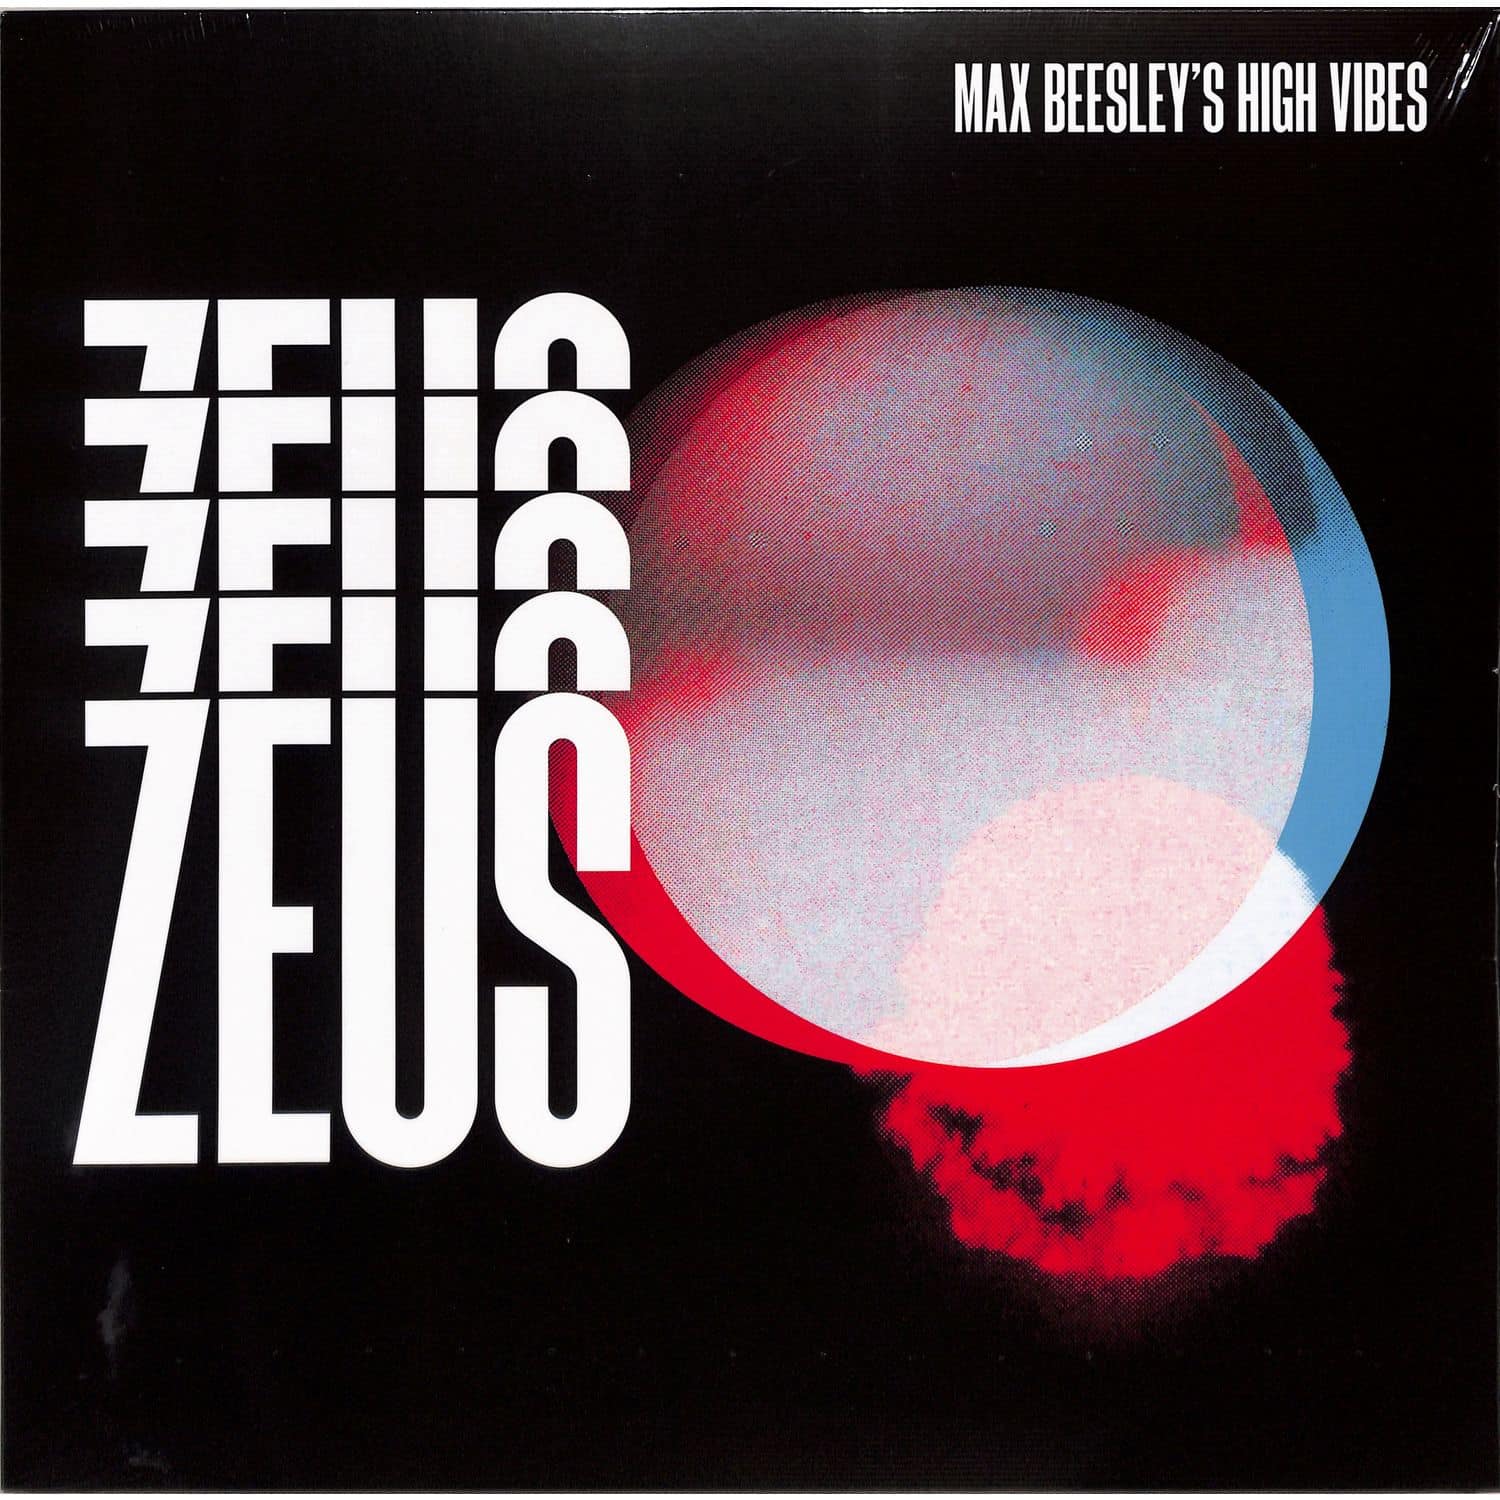 Max s High Vibes Beesley - ZEUS 